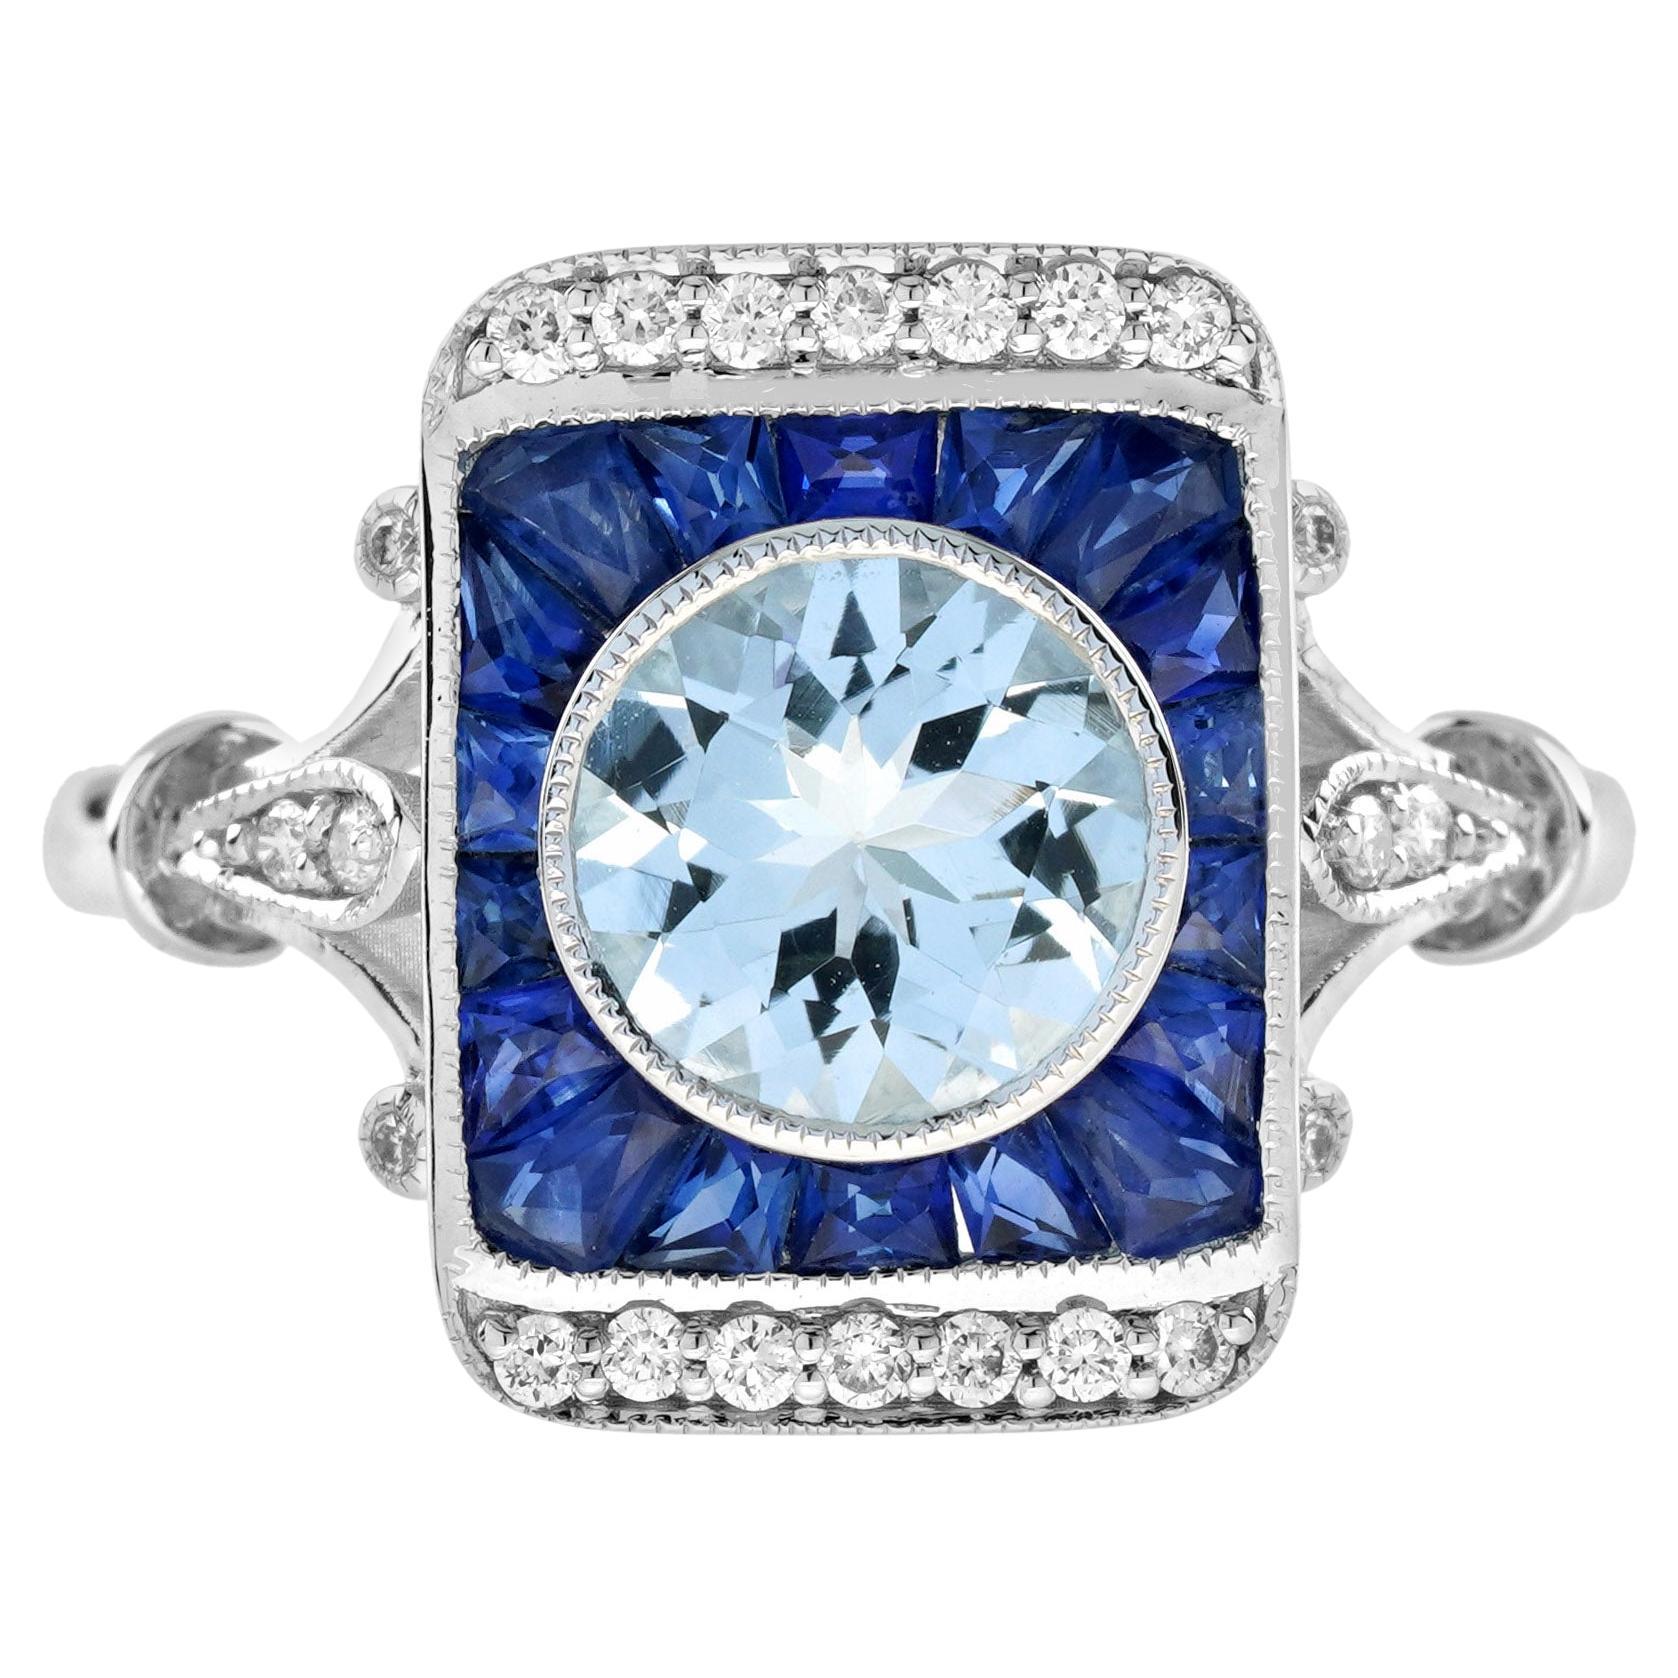 1.55 Ct. Bague de fiançailles aigue-marine saphir bleu saphir diamant en or blanc 18 carats